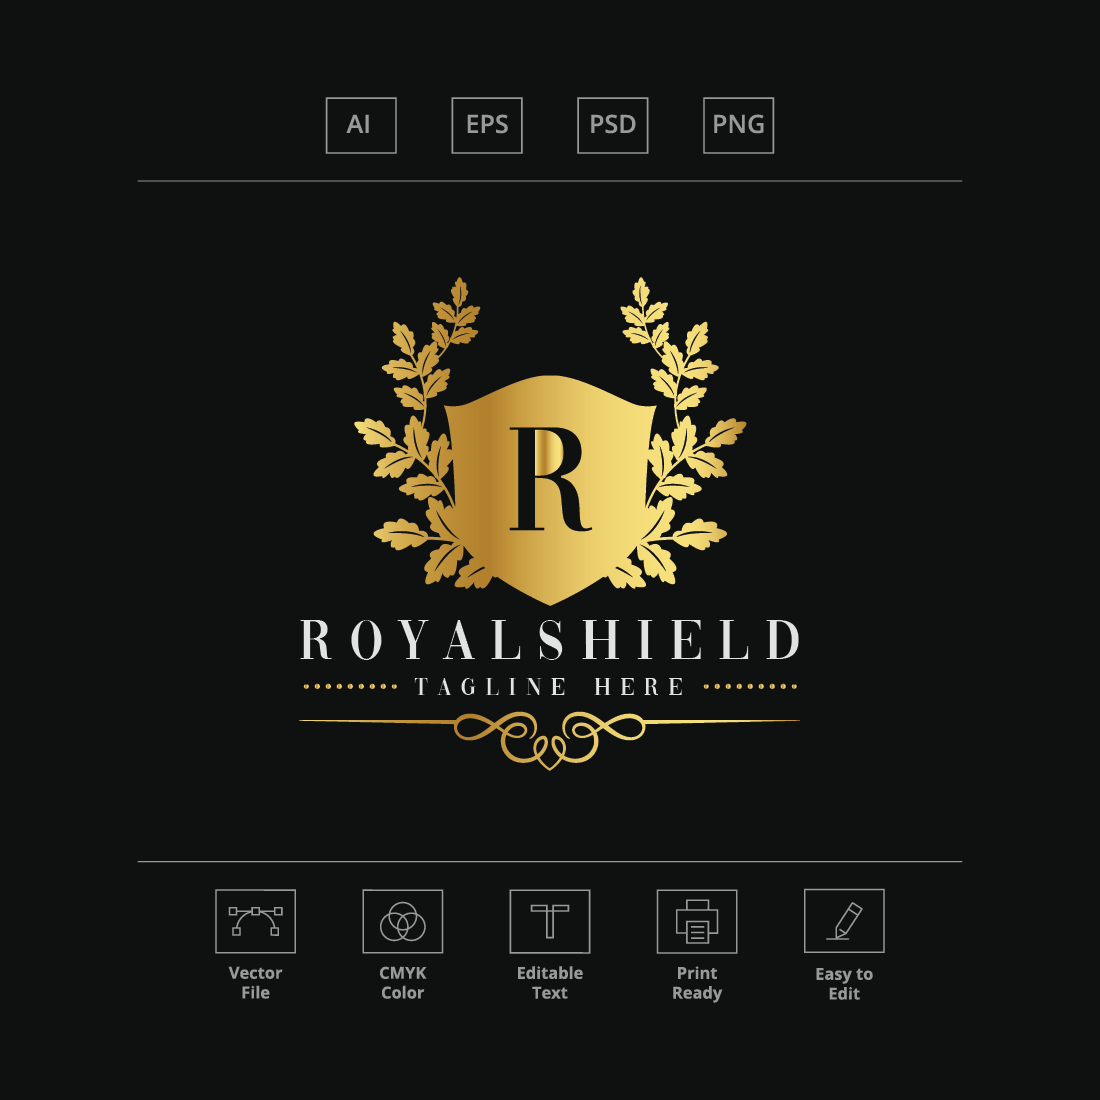 Royal Shield Letter R Logo cover image.